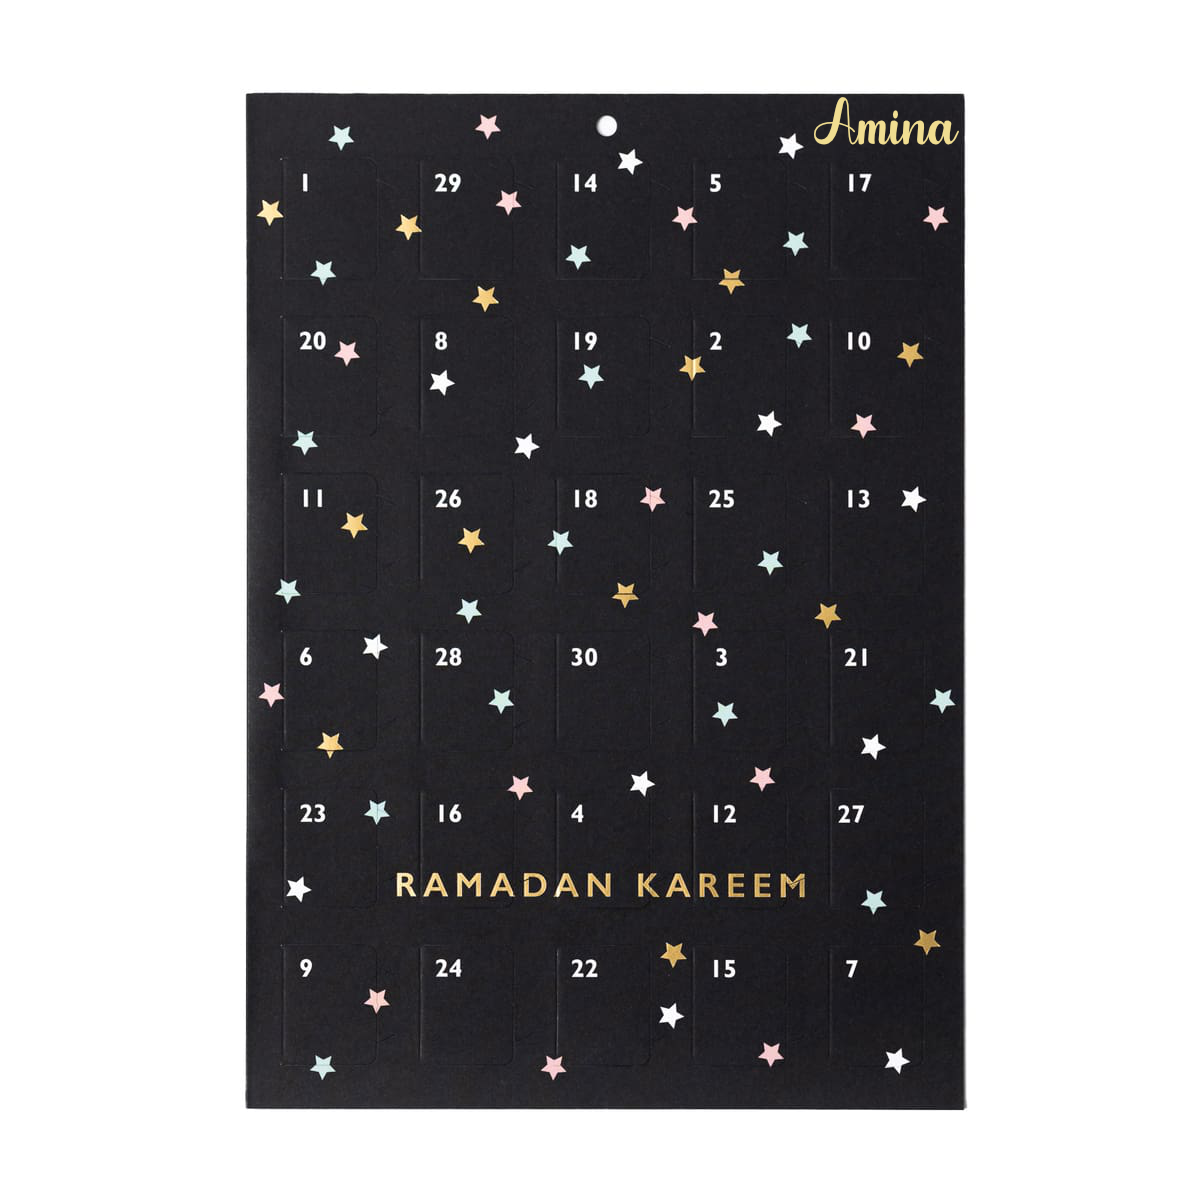 ramadan good deeds calendar night sky design with personalisation in top right corner